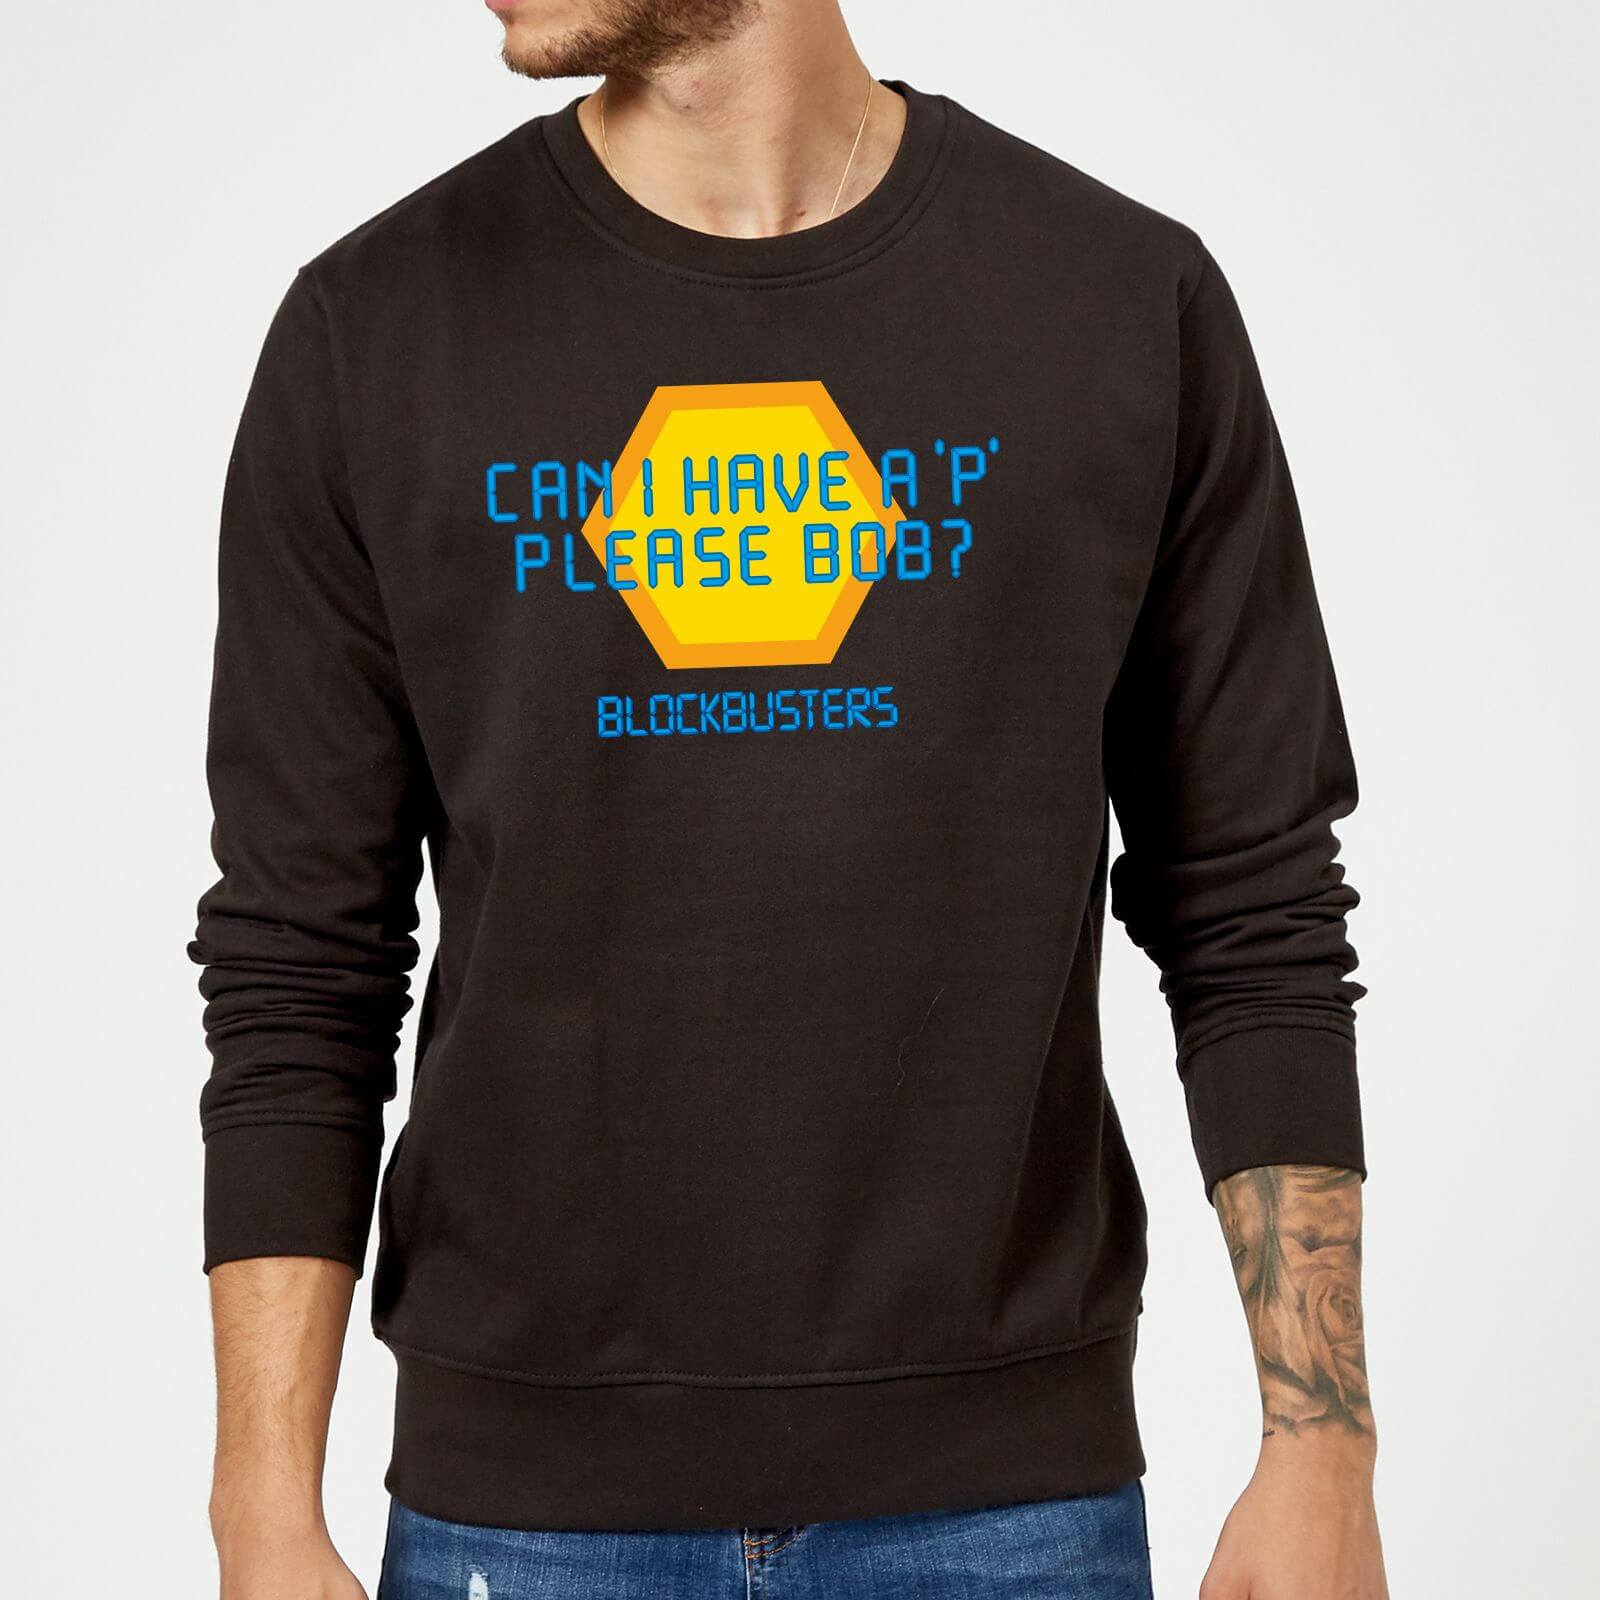 Blockbusters Can I Have A 'P' Please Bob? Sweatshirt - Black - S - Black